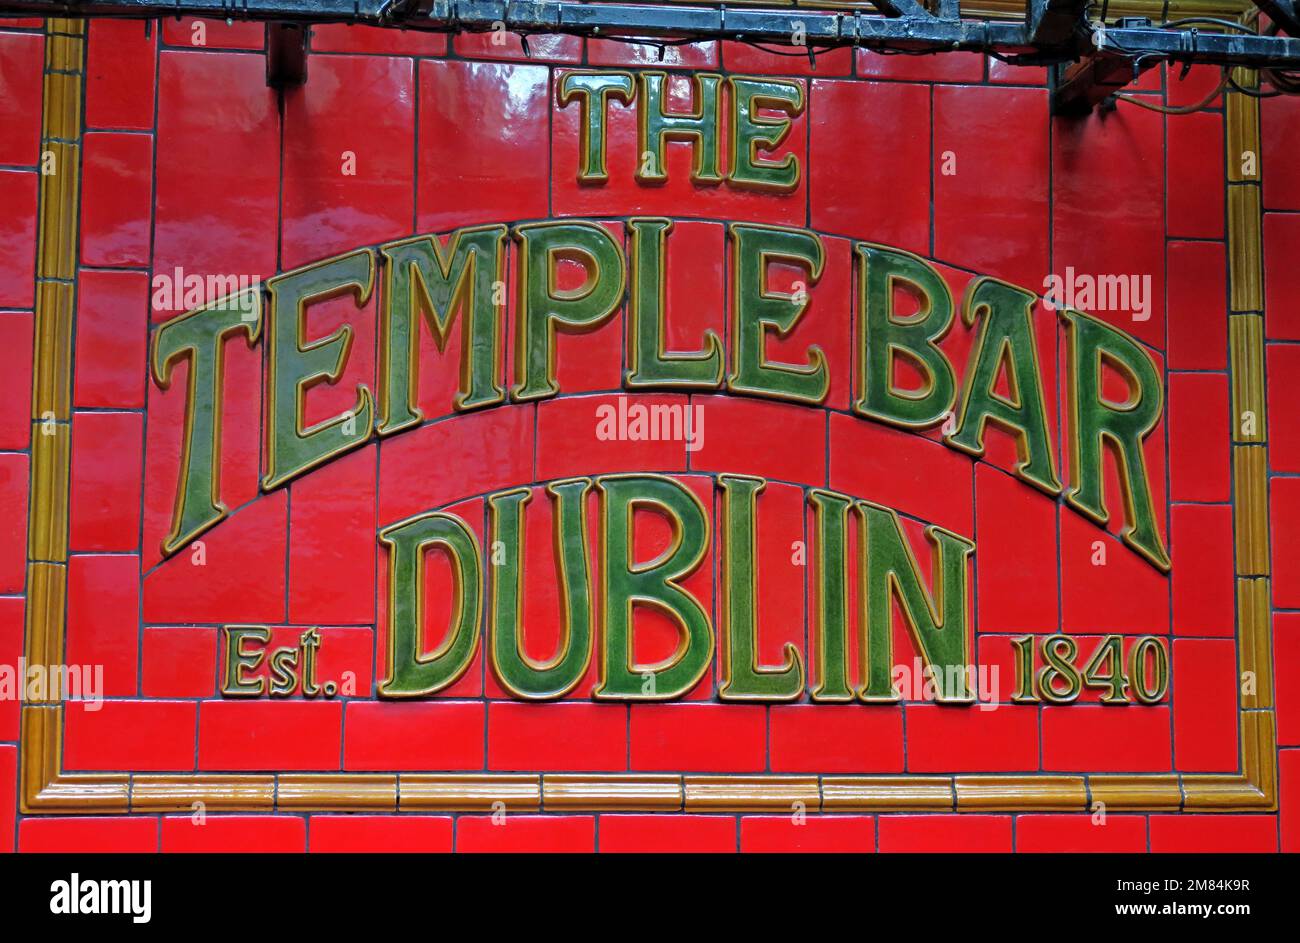 Parete rossa/verde piastrellata al Temple Bar, Dublino, Est 1840, 47-48 Temple Bar, Dublino 2, D02 N725, Eire, Irlanda Foto Stock